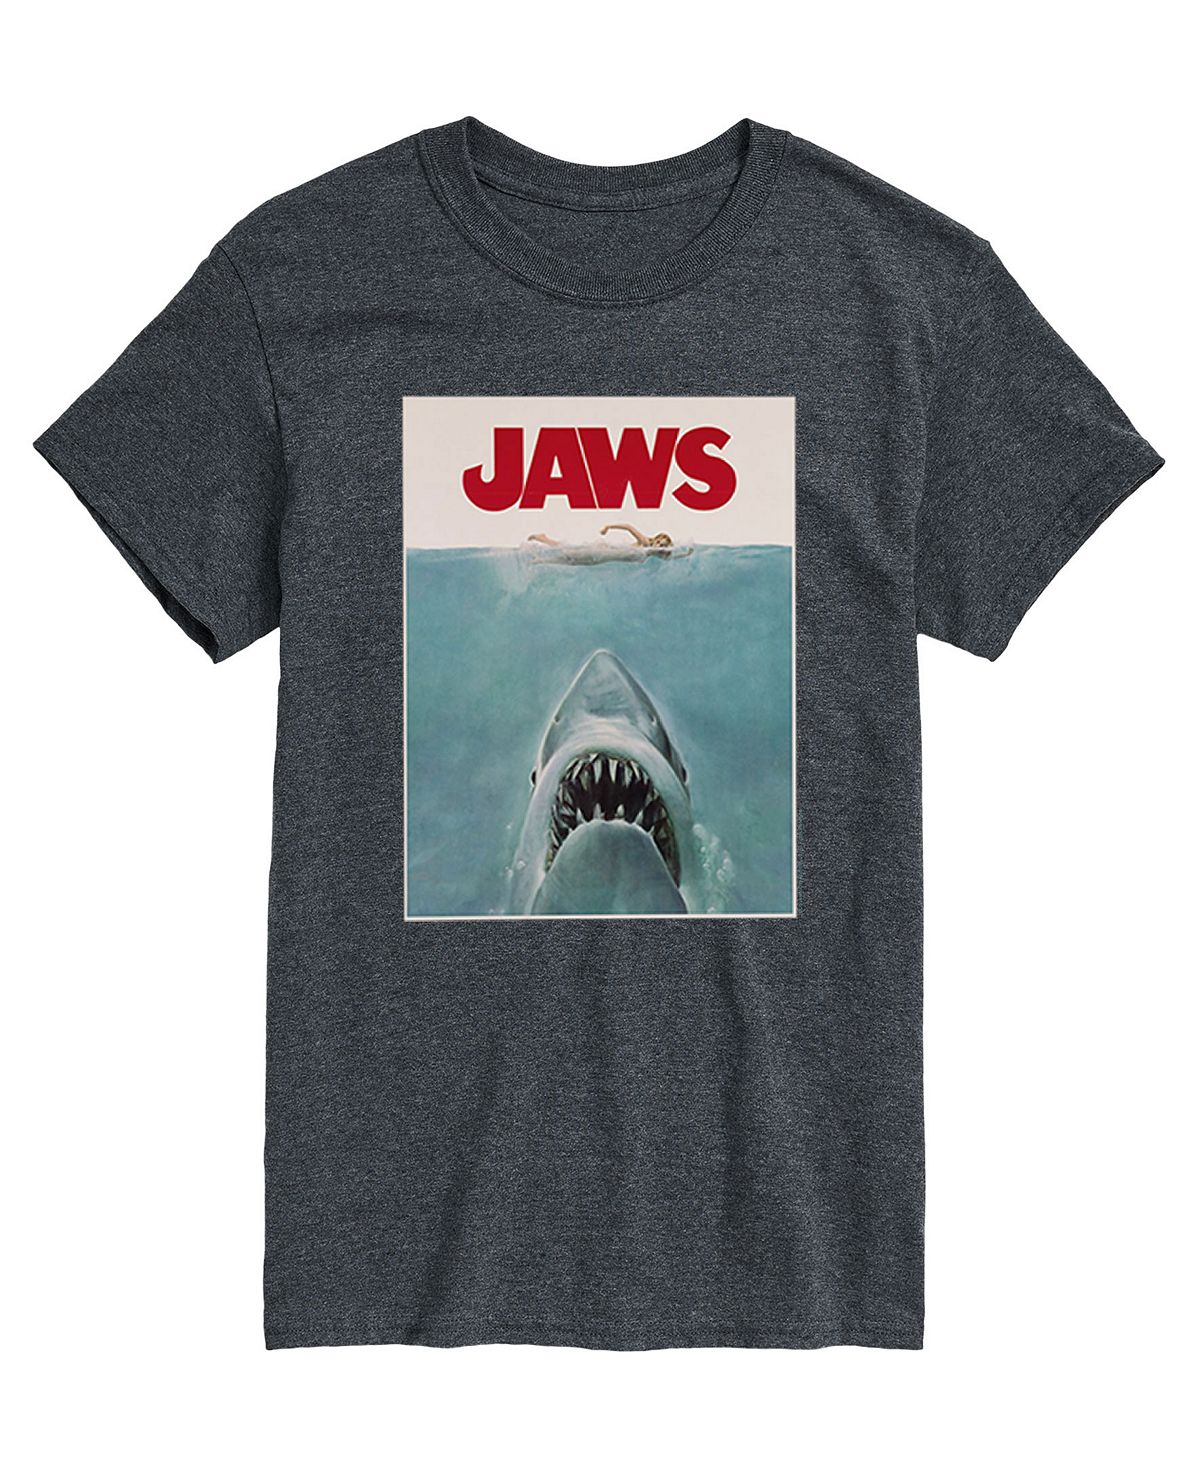 Мужская футболка с плакатом Jaws AIRWAVES цена и фото